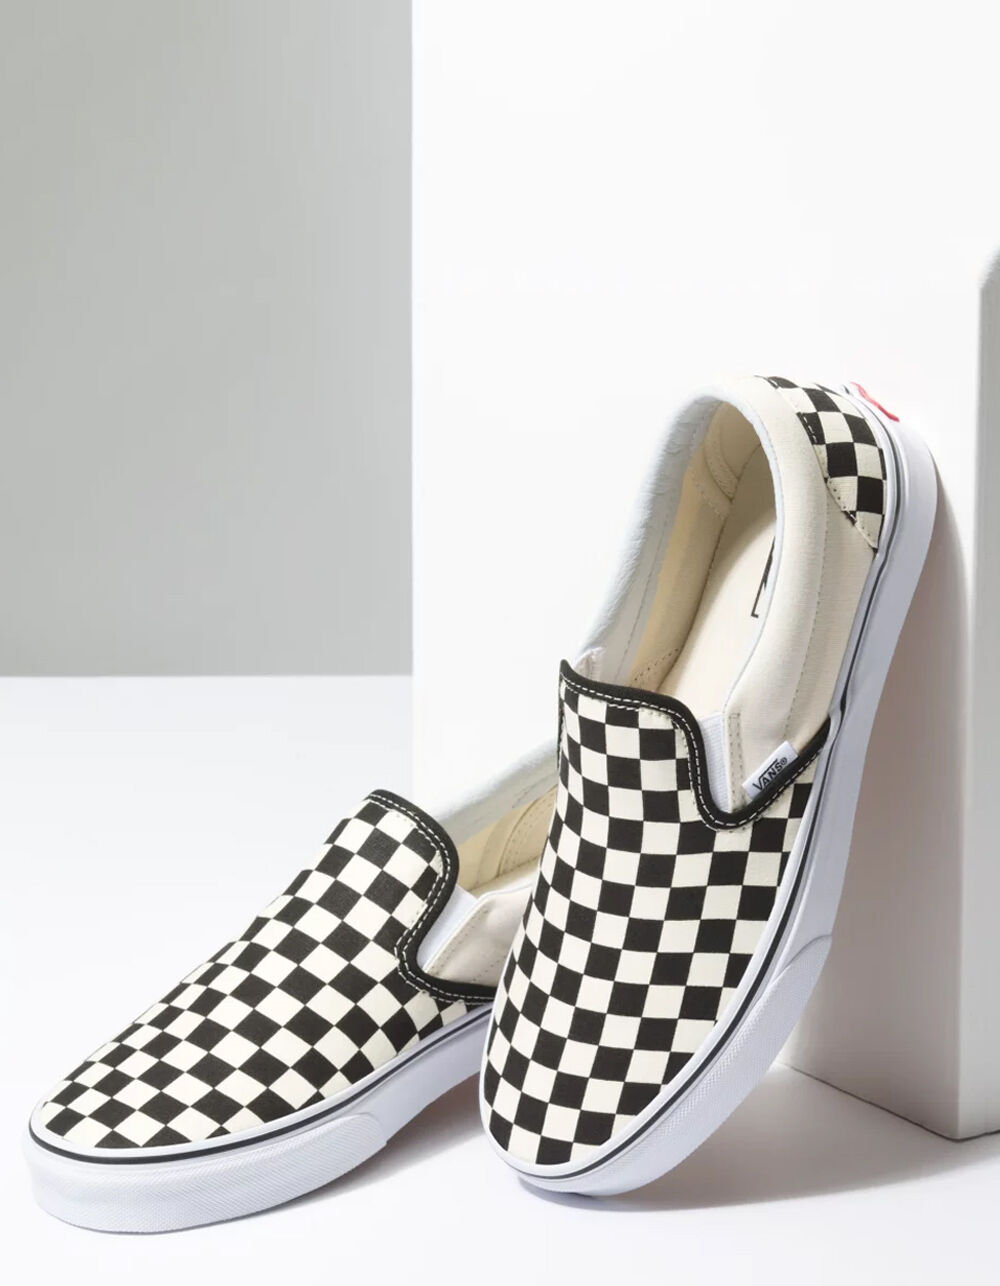 VANS Checkerboard Slip-On Black u0026 Off White Shoes - CHECKERBOARD | Tillys